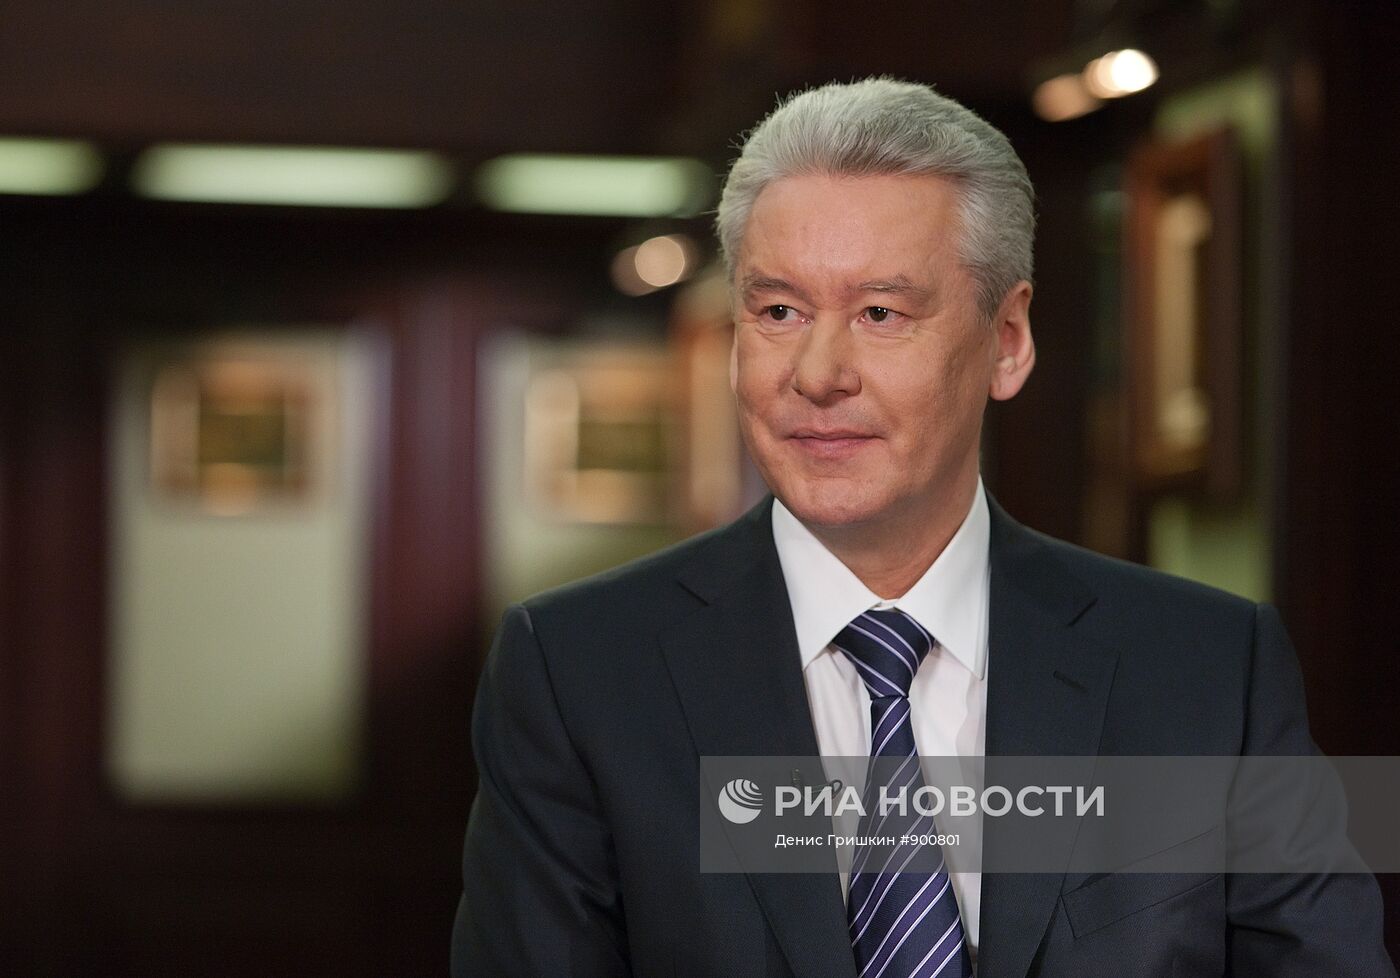 Мэр Москвы Сергей Собянин дал интервью